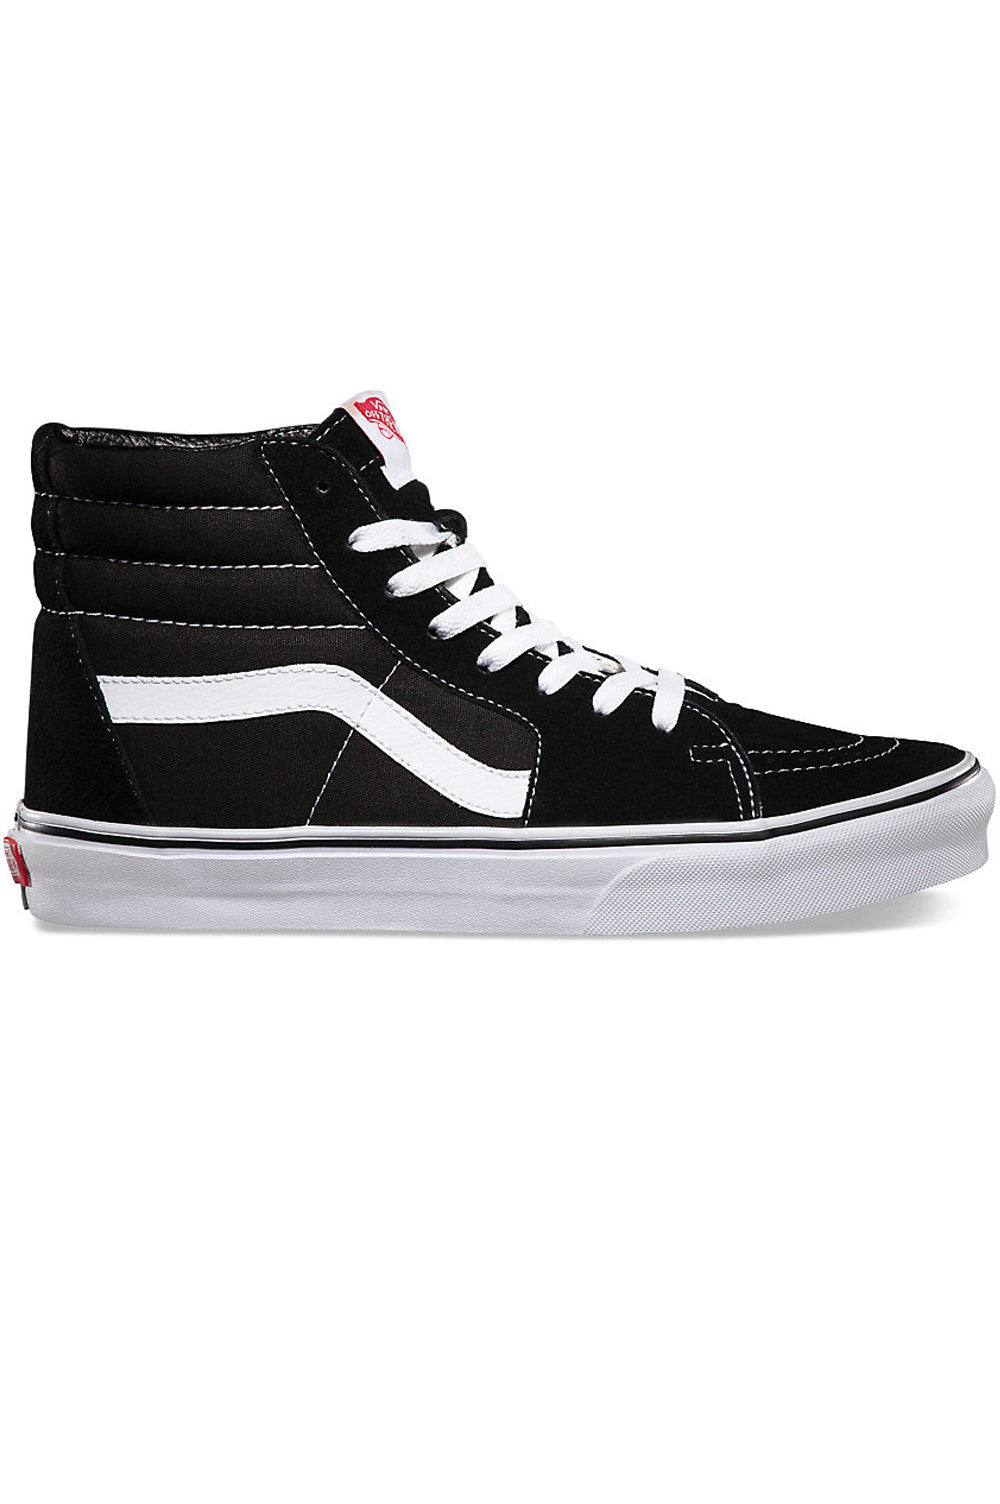 Vans Men Sk8 Hi Skate Shoes 6.5 Men  black/white